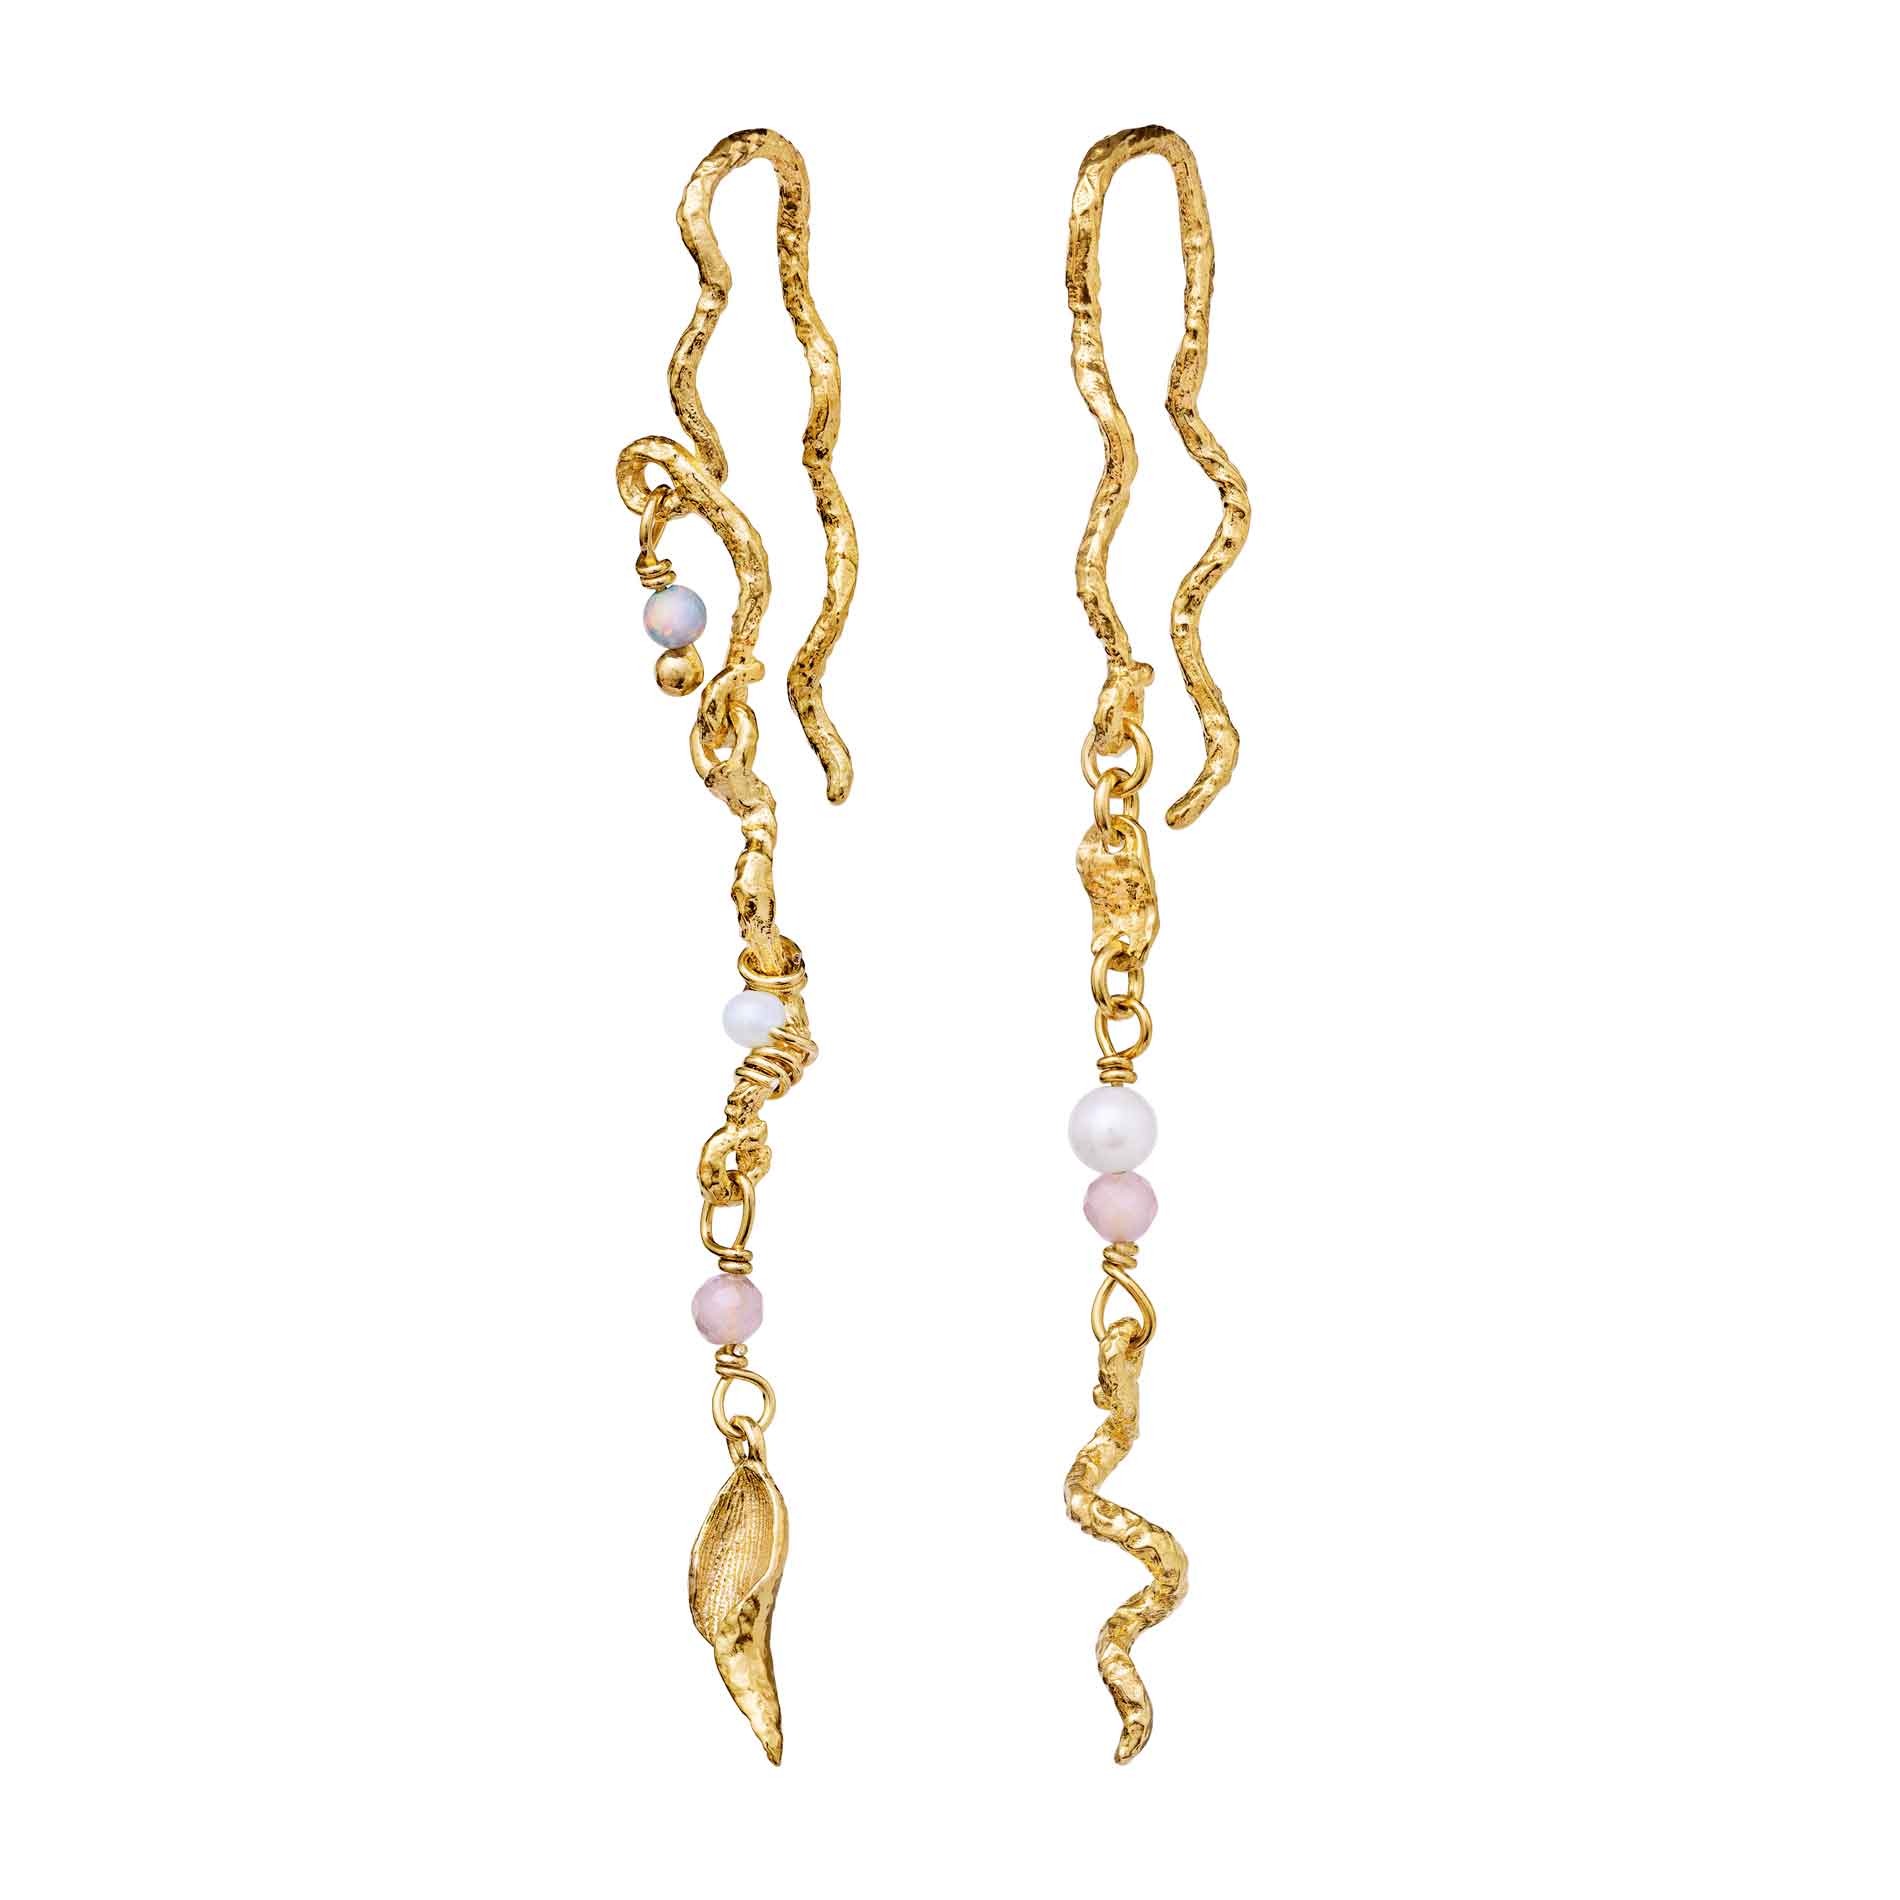 Forgyldte ørebøjler fra Mannesten i bølget design med perler, opal og akvamarin